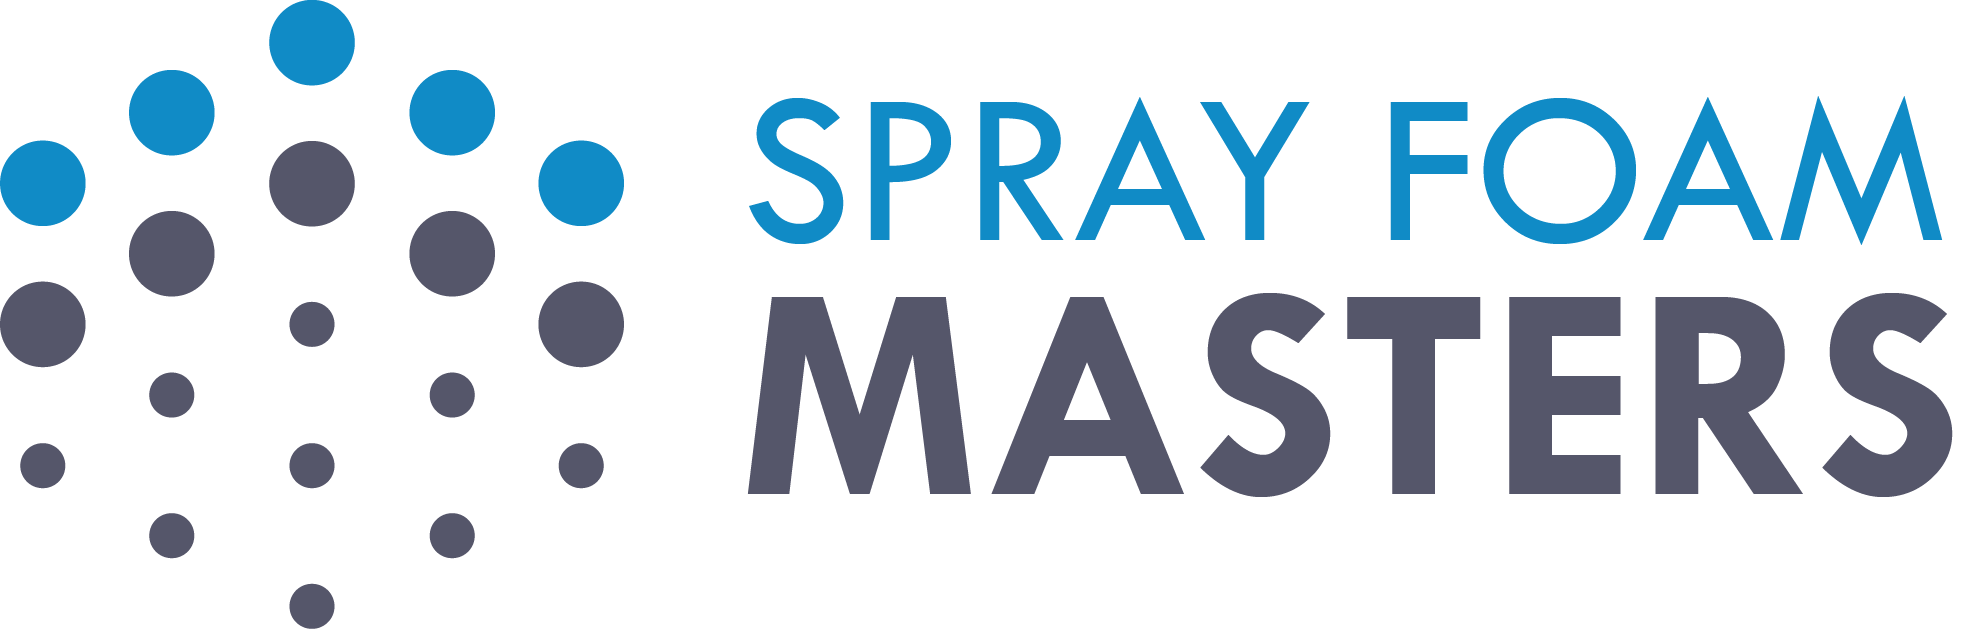 Spray Foam Masters